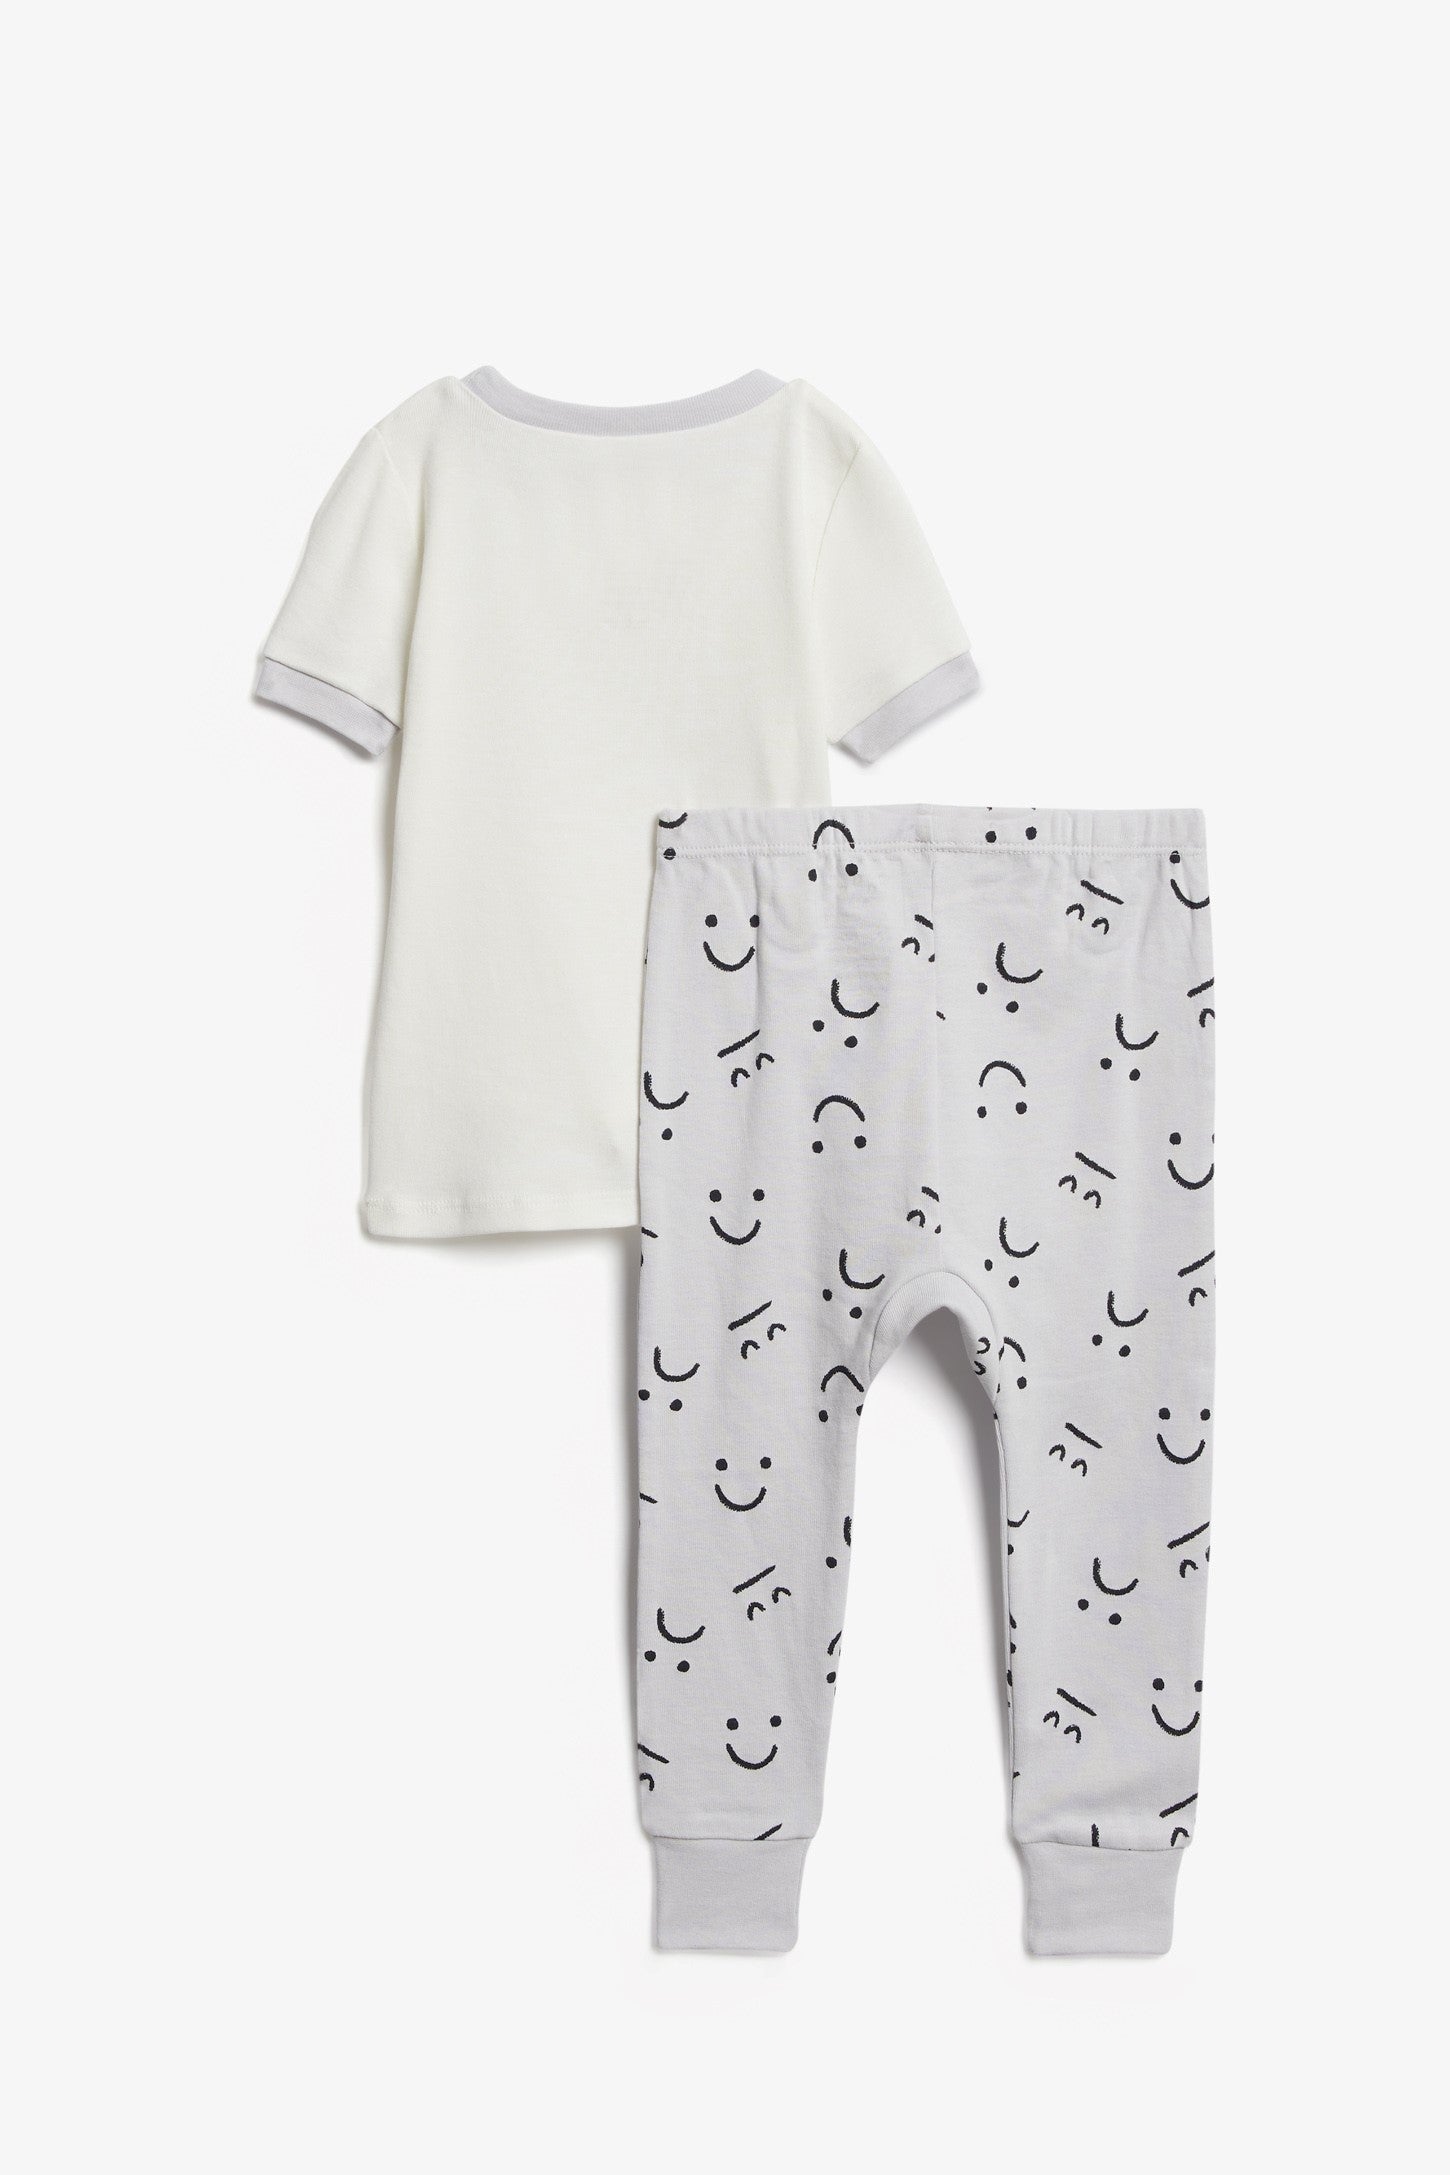 Pyjama 2-pièces en coton bio, 2/30$ - Bébé && BLANC